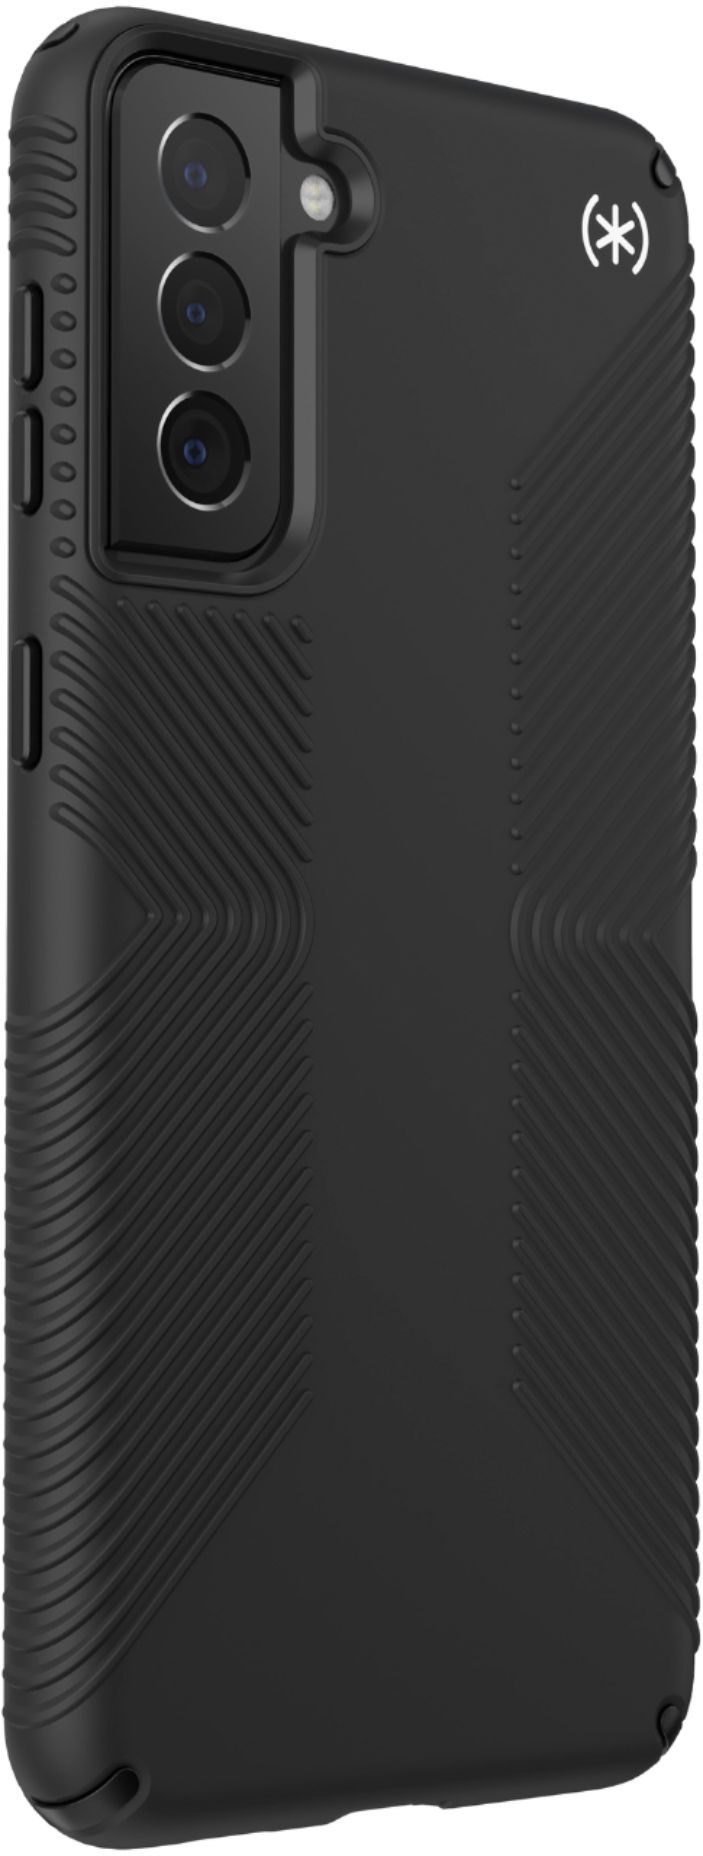 Angle View: Speck - Presidio2 Grip Case for Samsung Galaxy S21+ 5G - Black